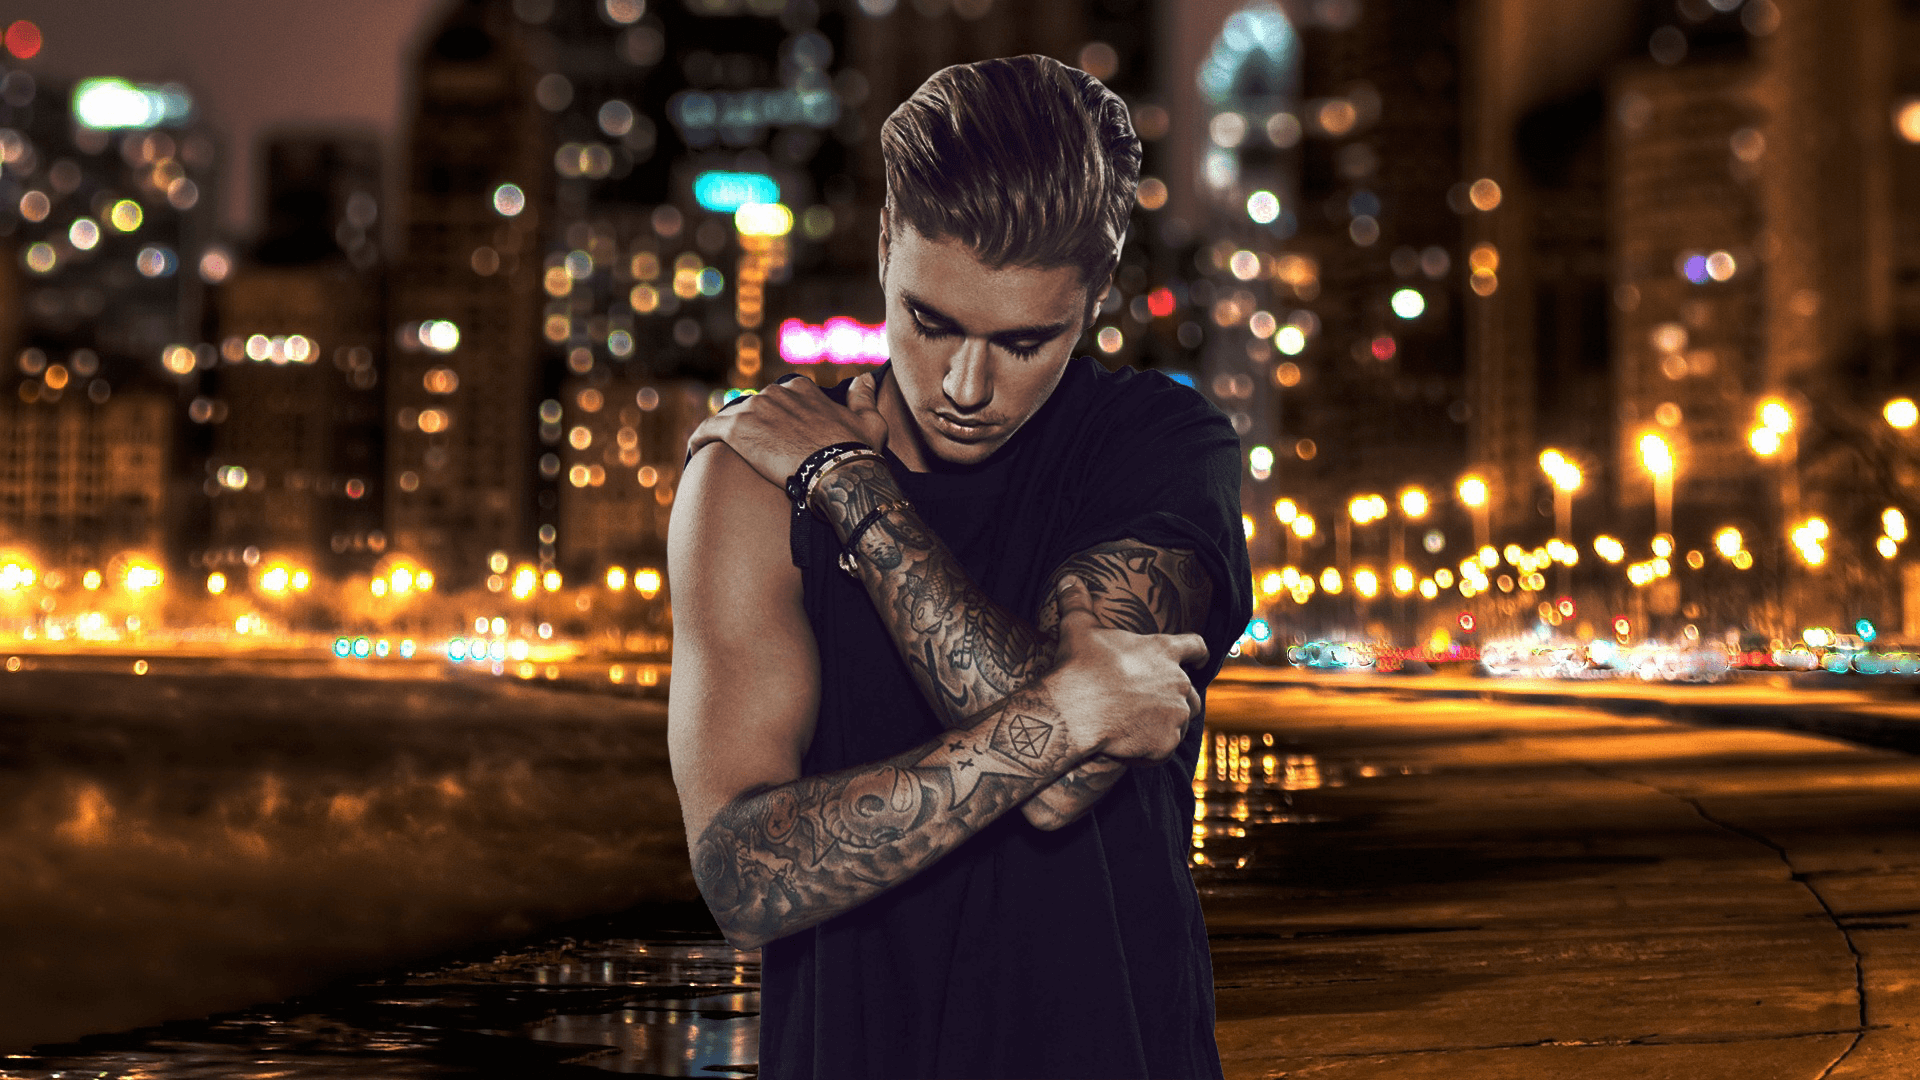 Justin Bieber Wallpapers HD 2016 - Wallpaper Cave